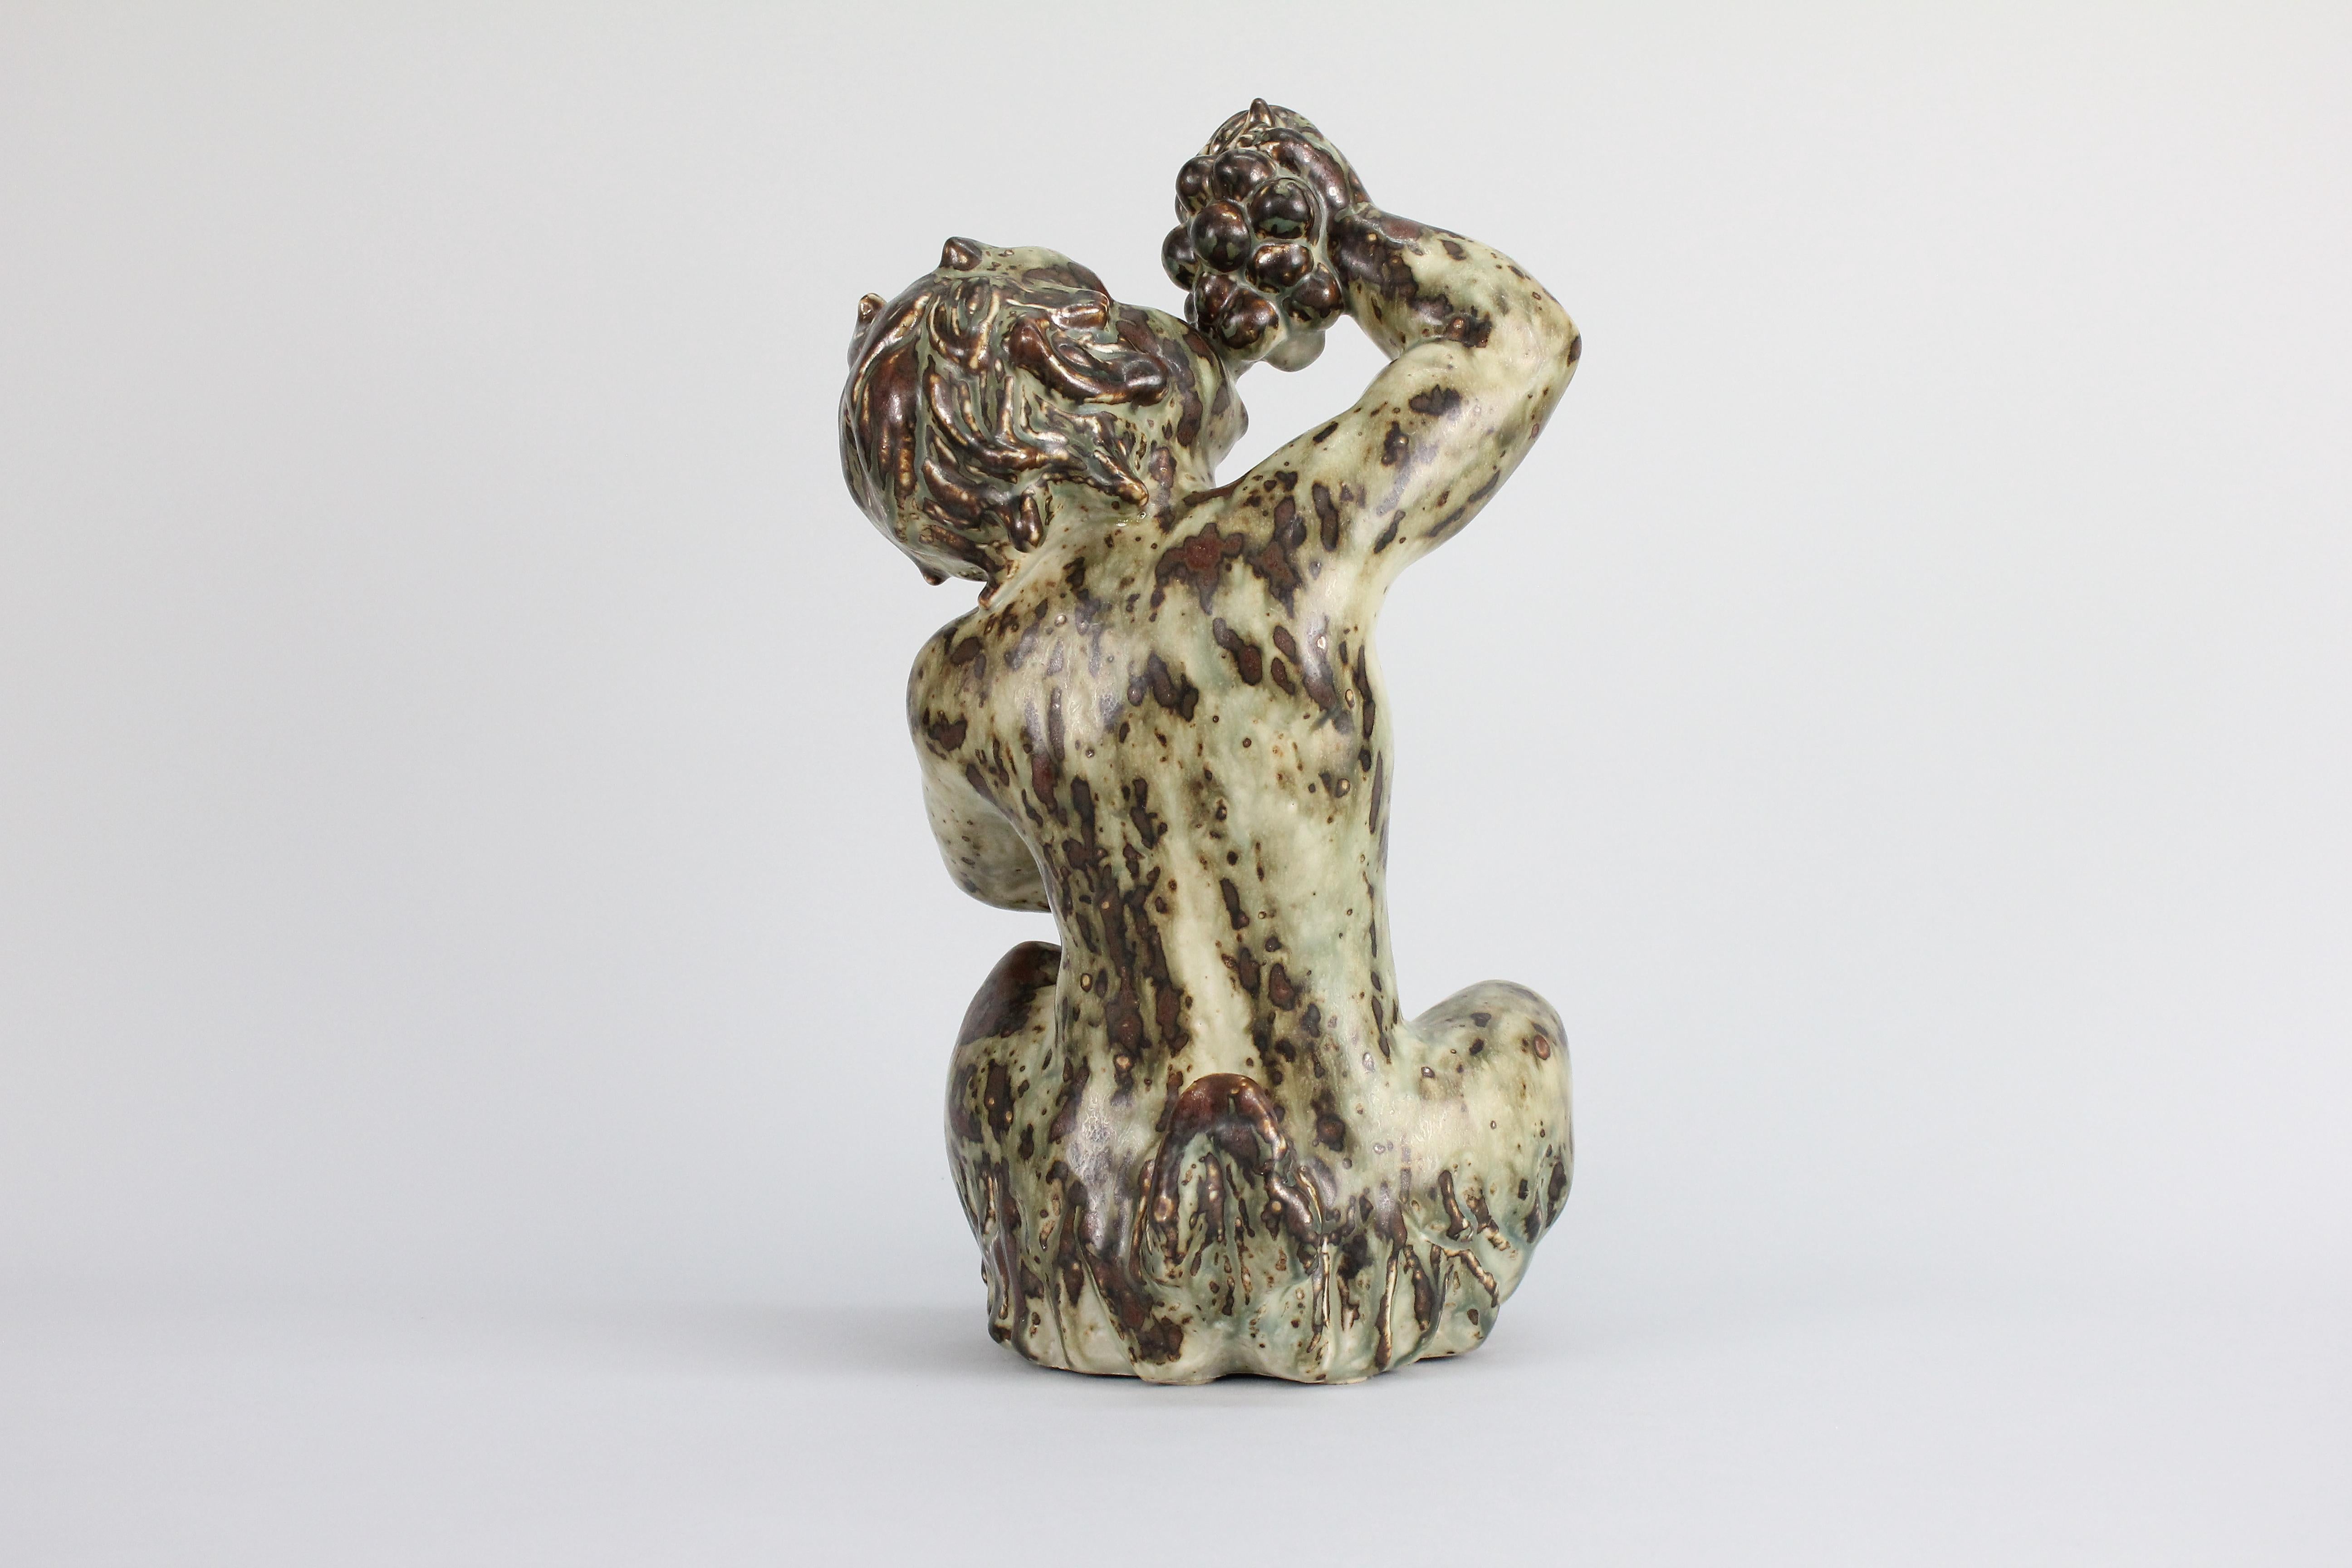 Glazed Ceramic Sculpture by Knyd Kyhn for Royal Copenhagen, Denmark